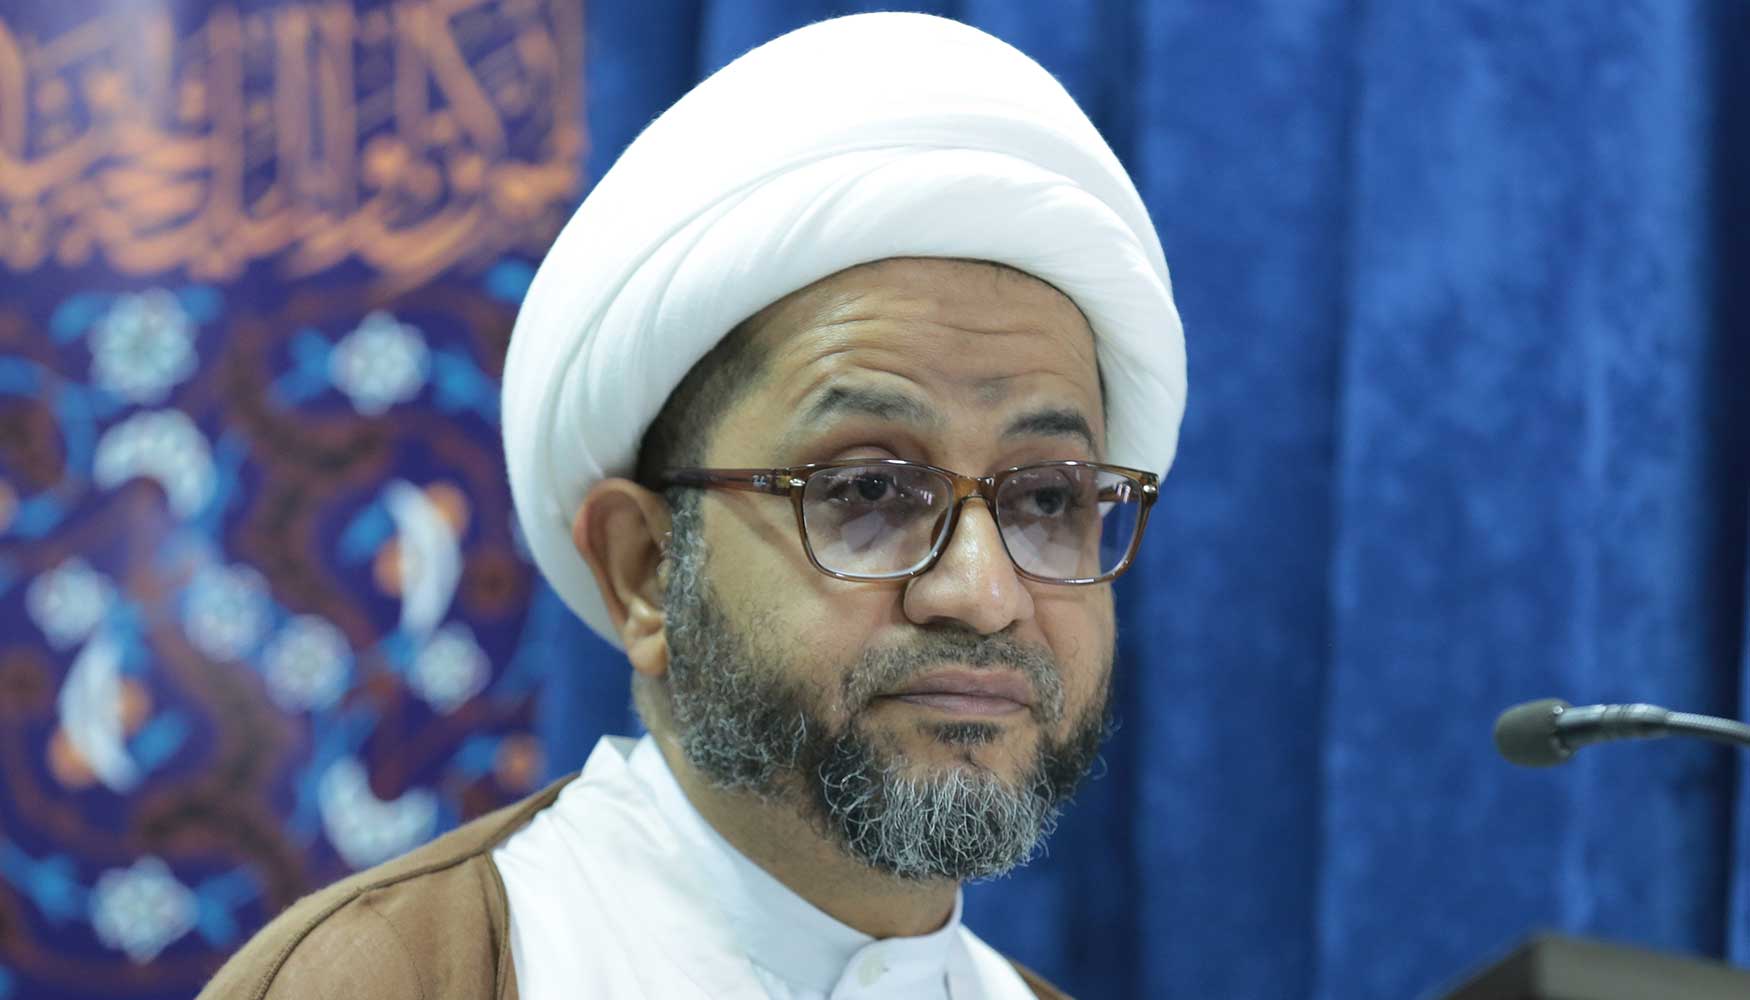 Sheikh Mohammad Sankour